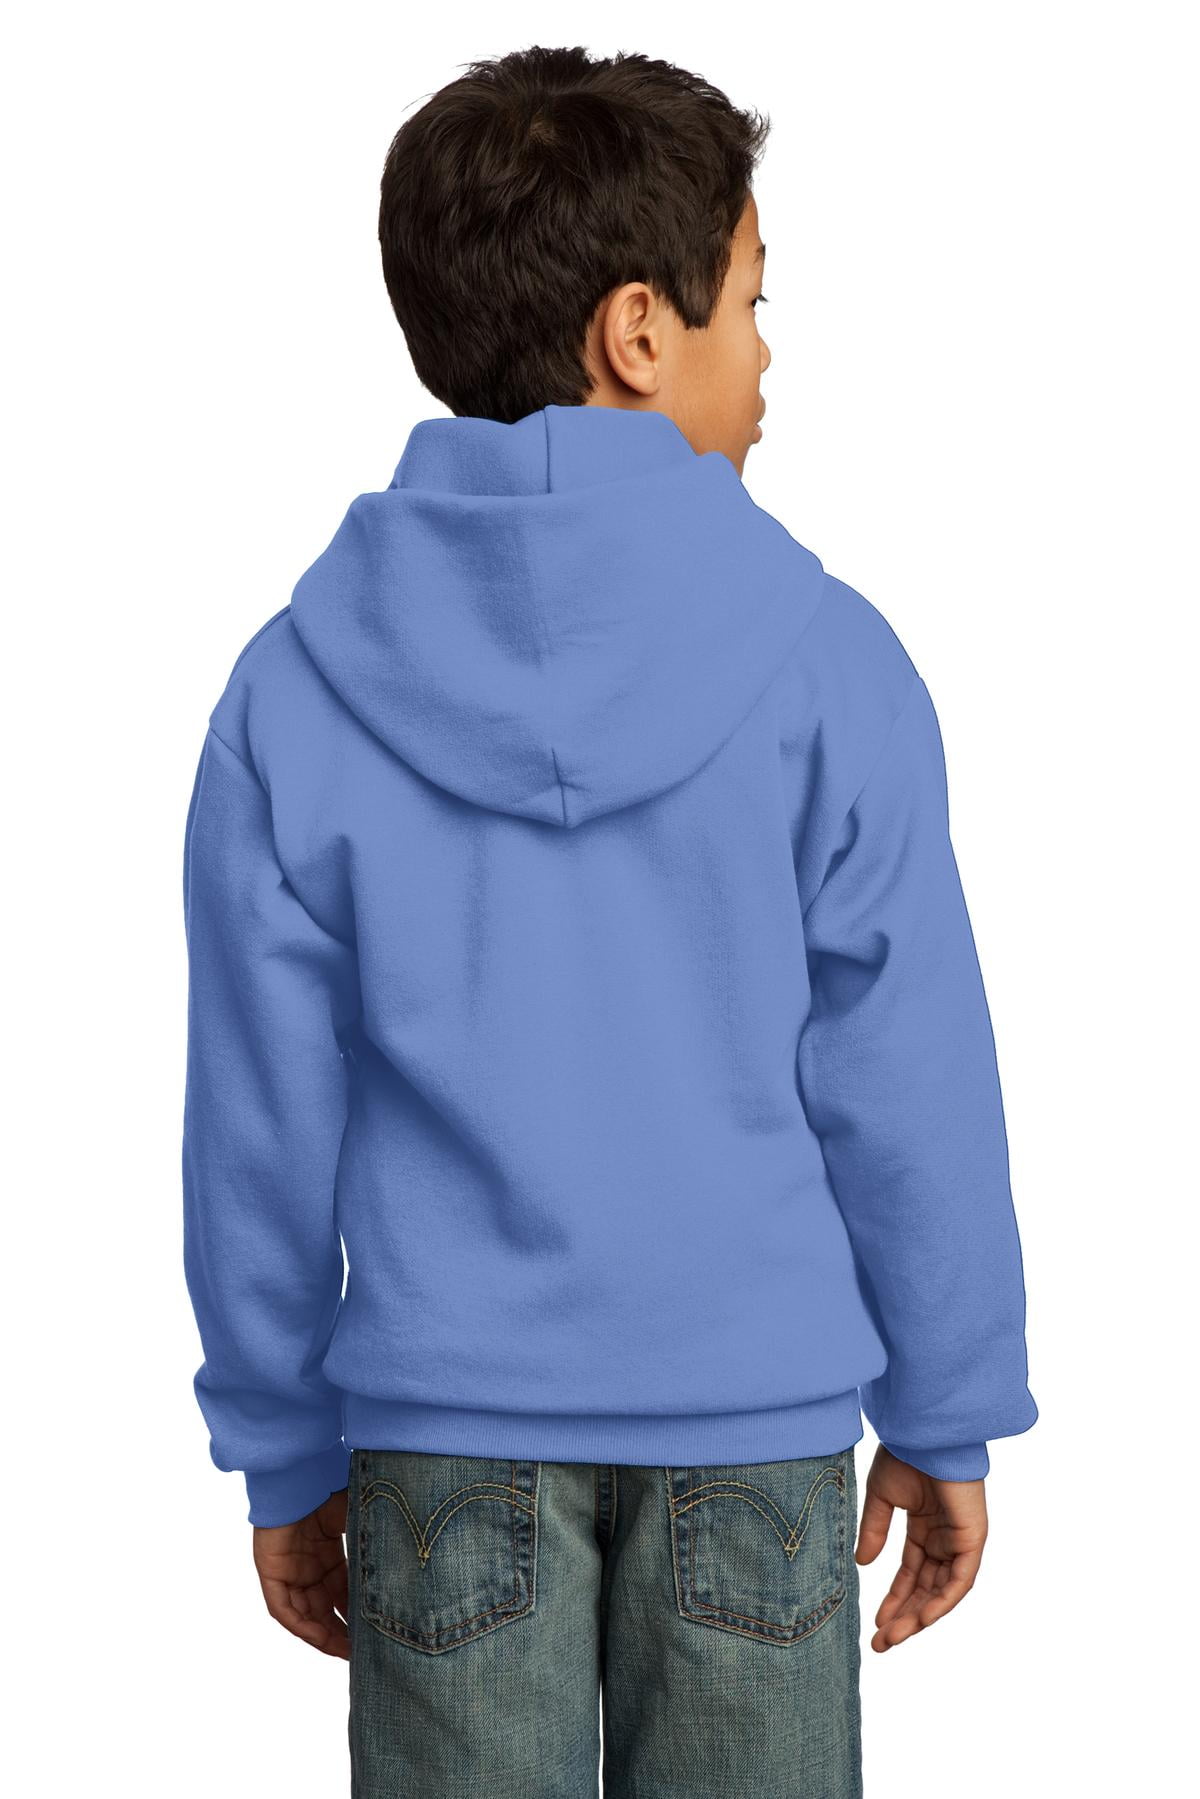 Blue) & Core Port (Carolina Fleece Youth Company Pullover Hooded Sweatshirt-L